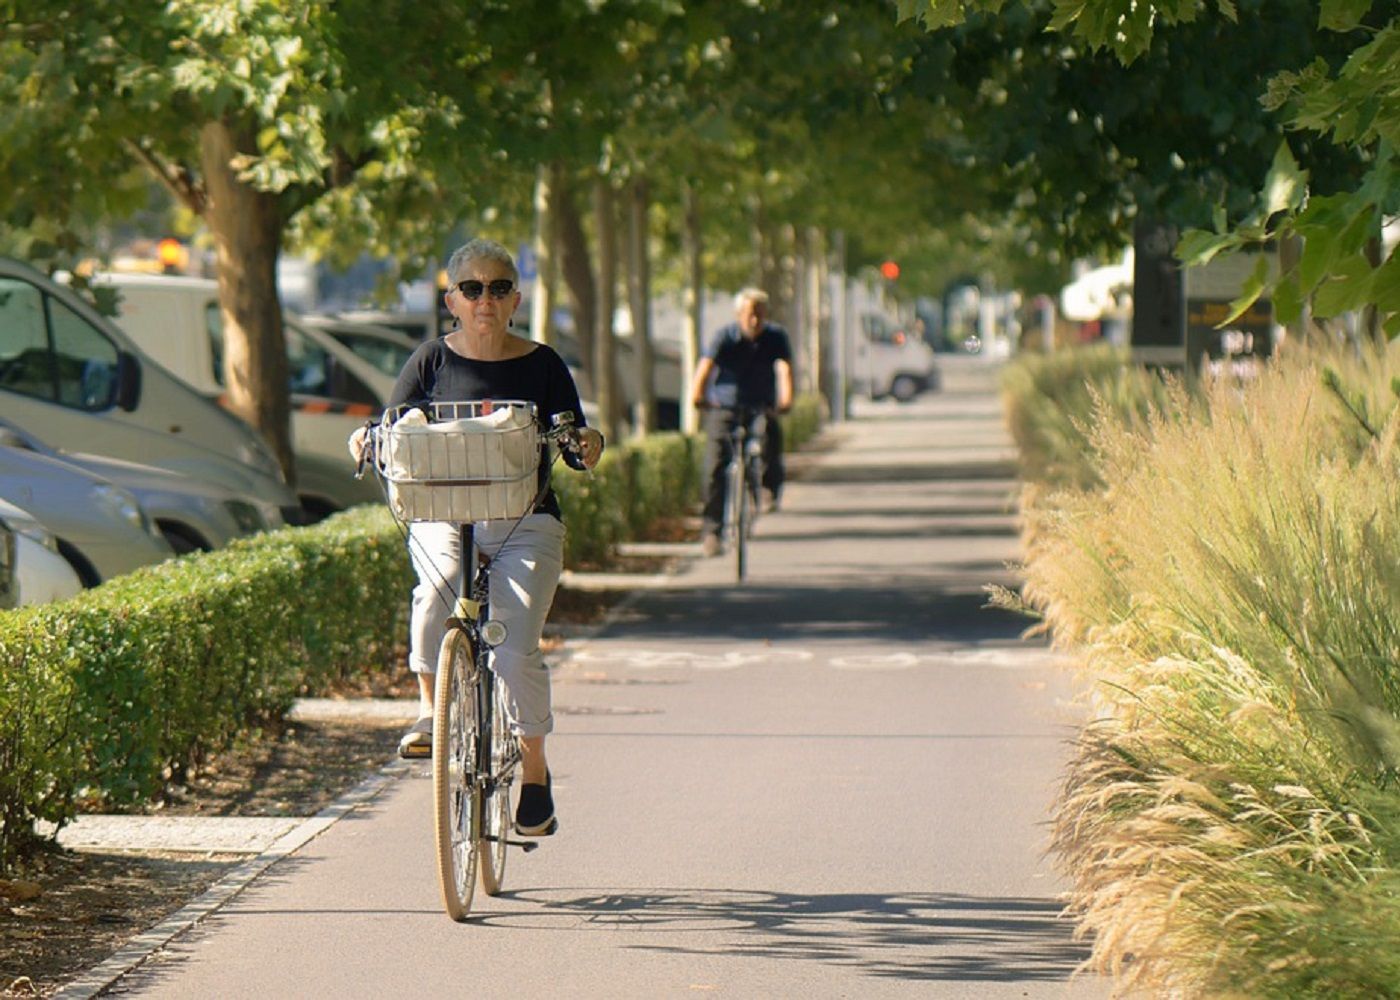 Two senior citizen riding a bicycle